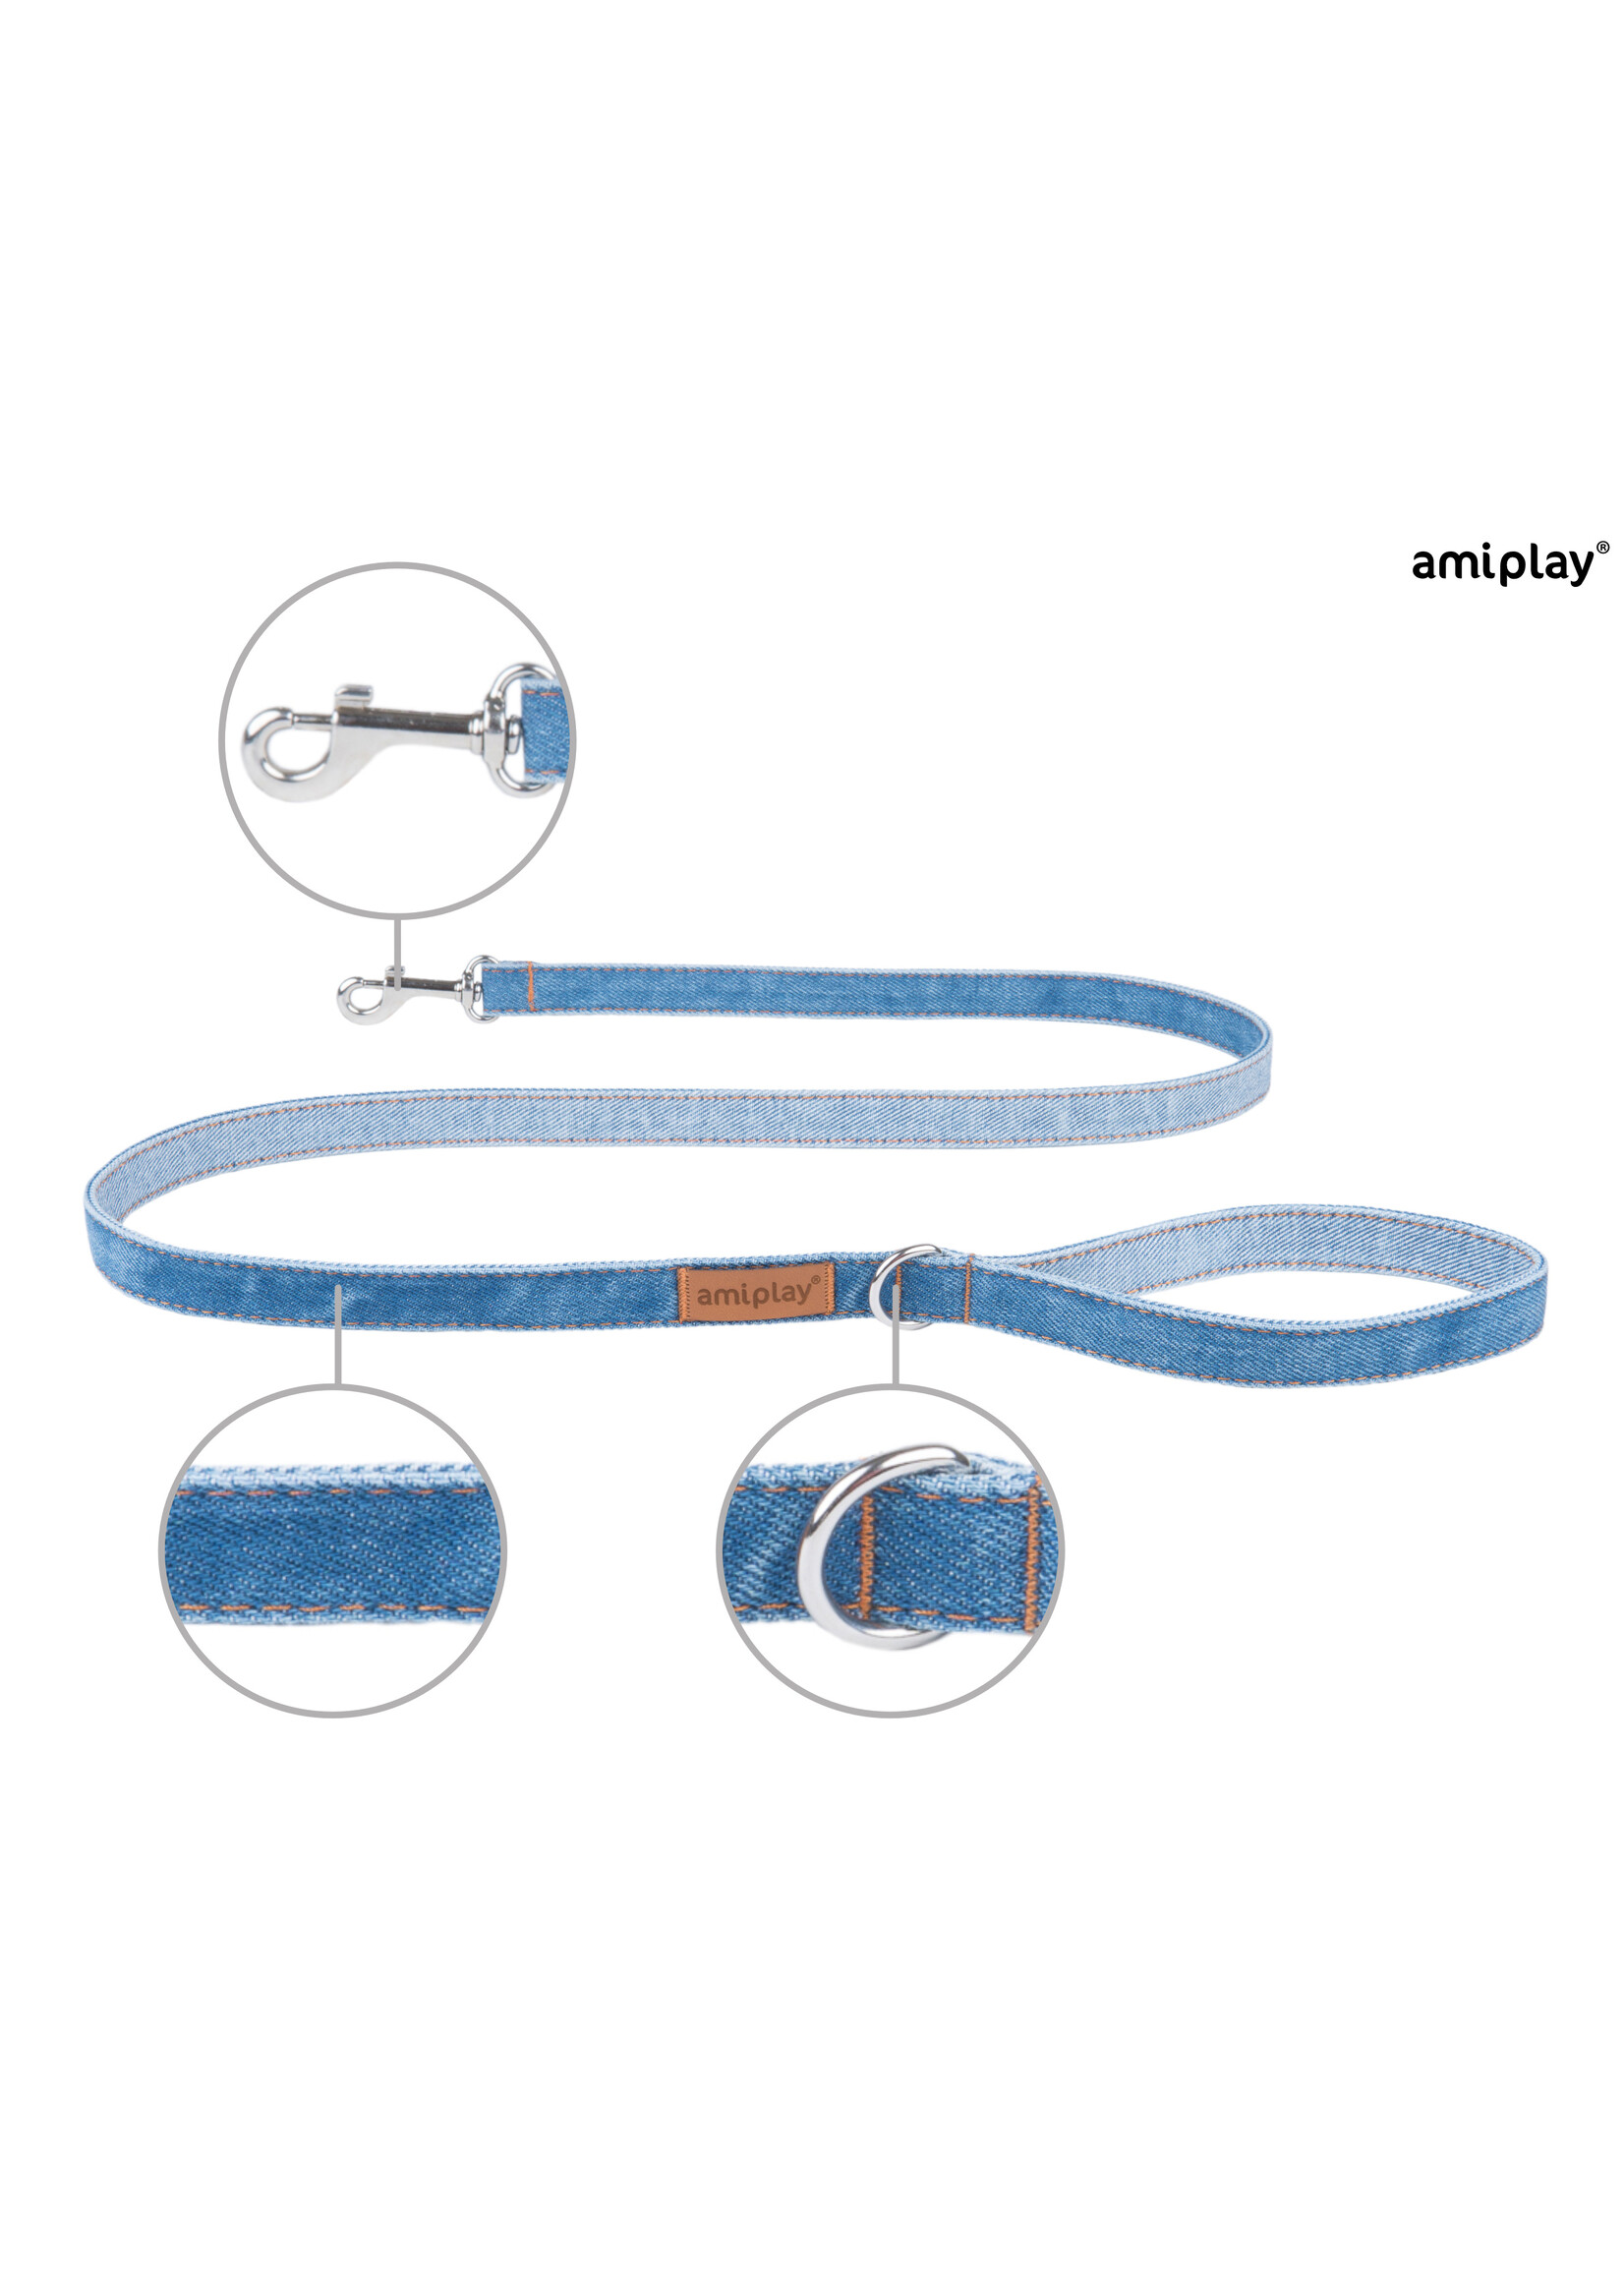 Amiplay Leiband Denim blauw maat-M / 140x1,5cm